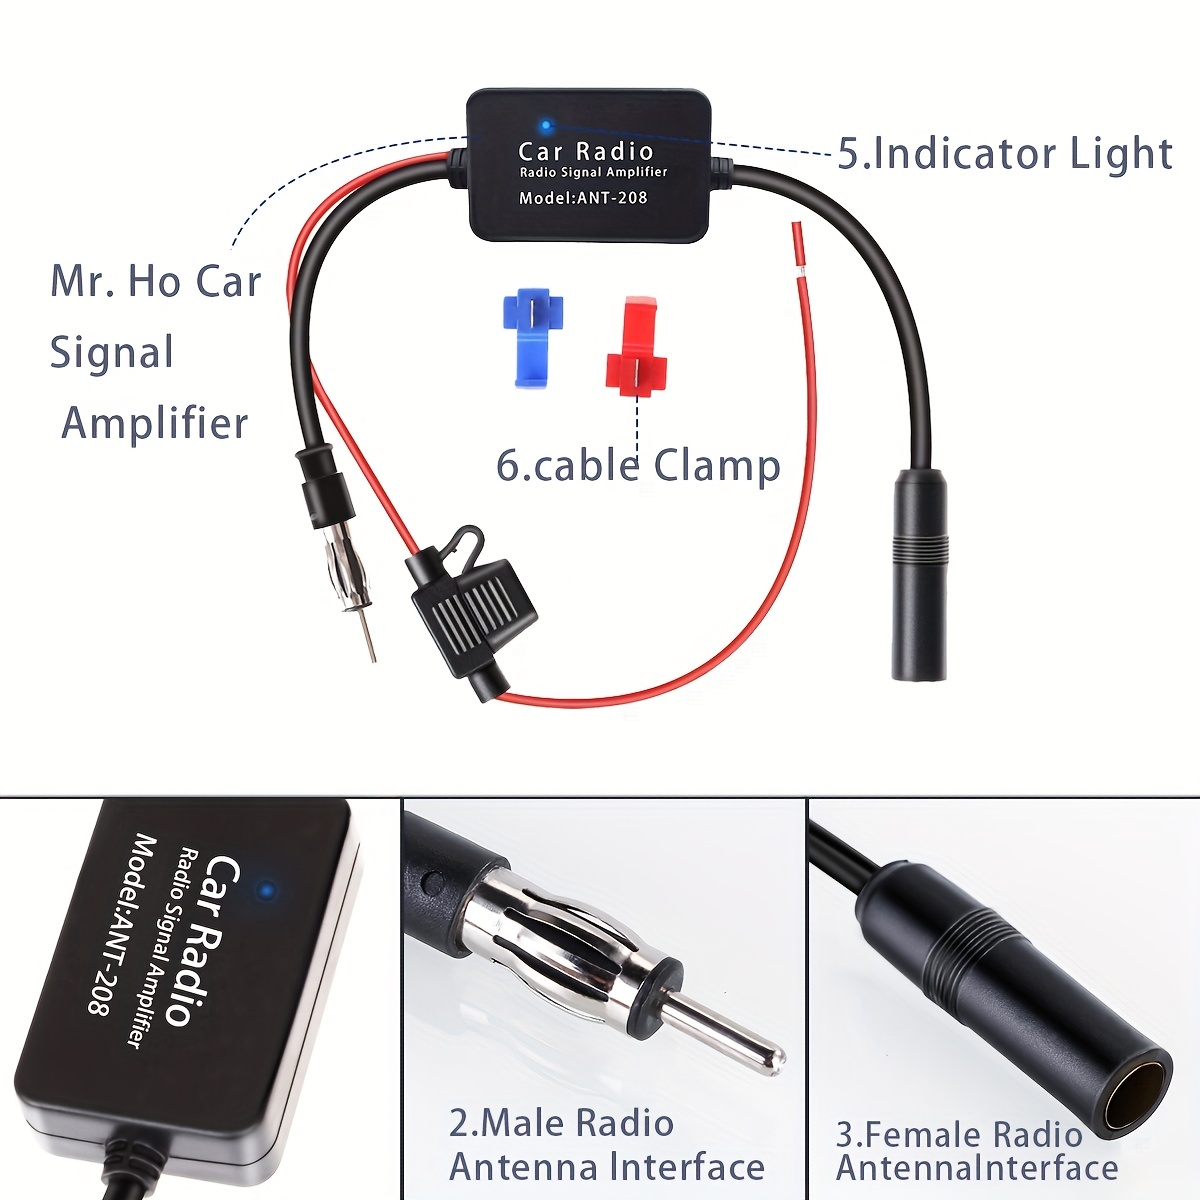 Car Digital Radio Antenna Dab+fm Active Gain Amplification - Temu